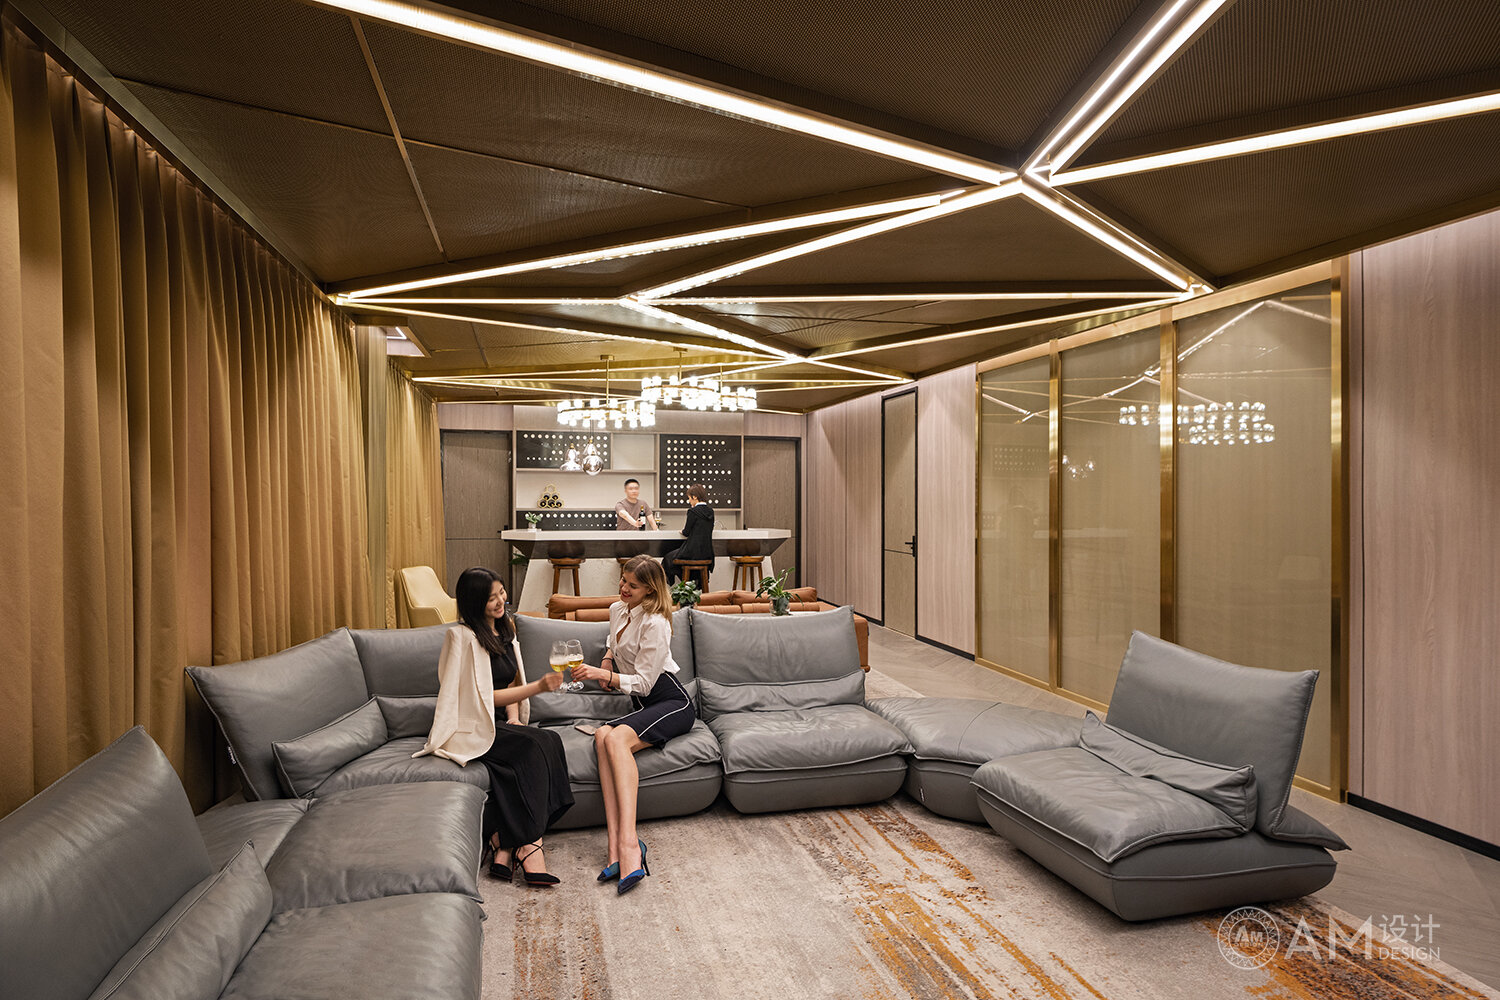 AM DESIGN | Beijing Taihe Music Group Office Customer Reception Room Design